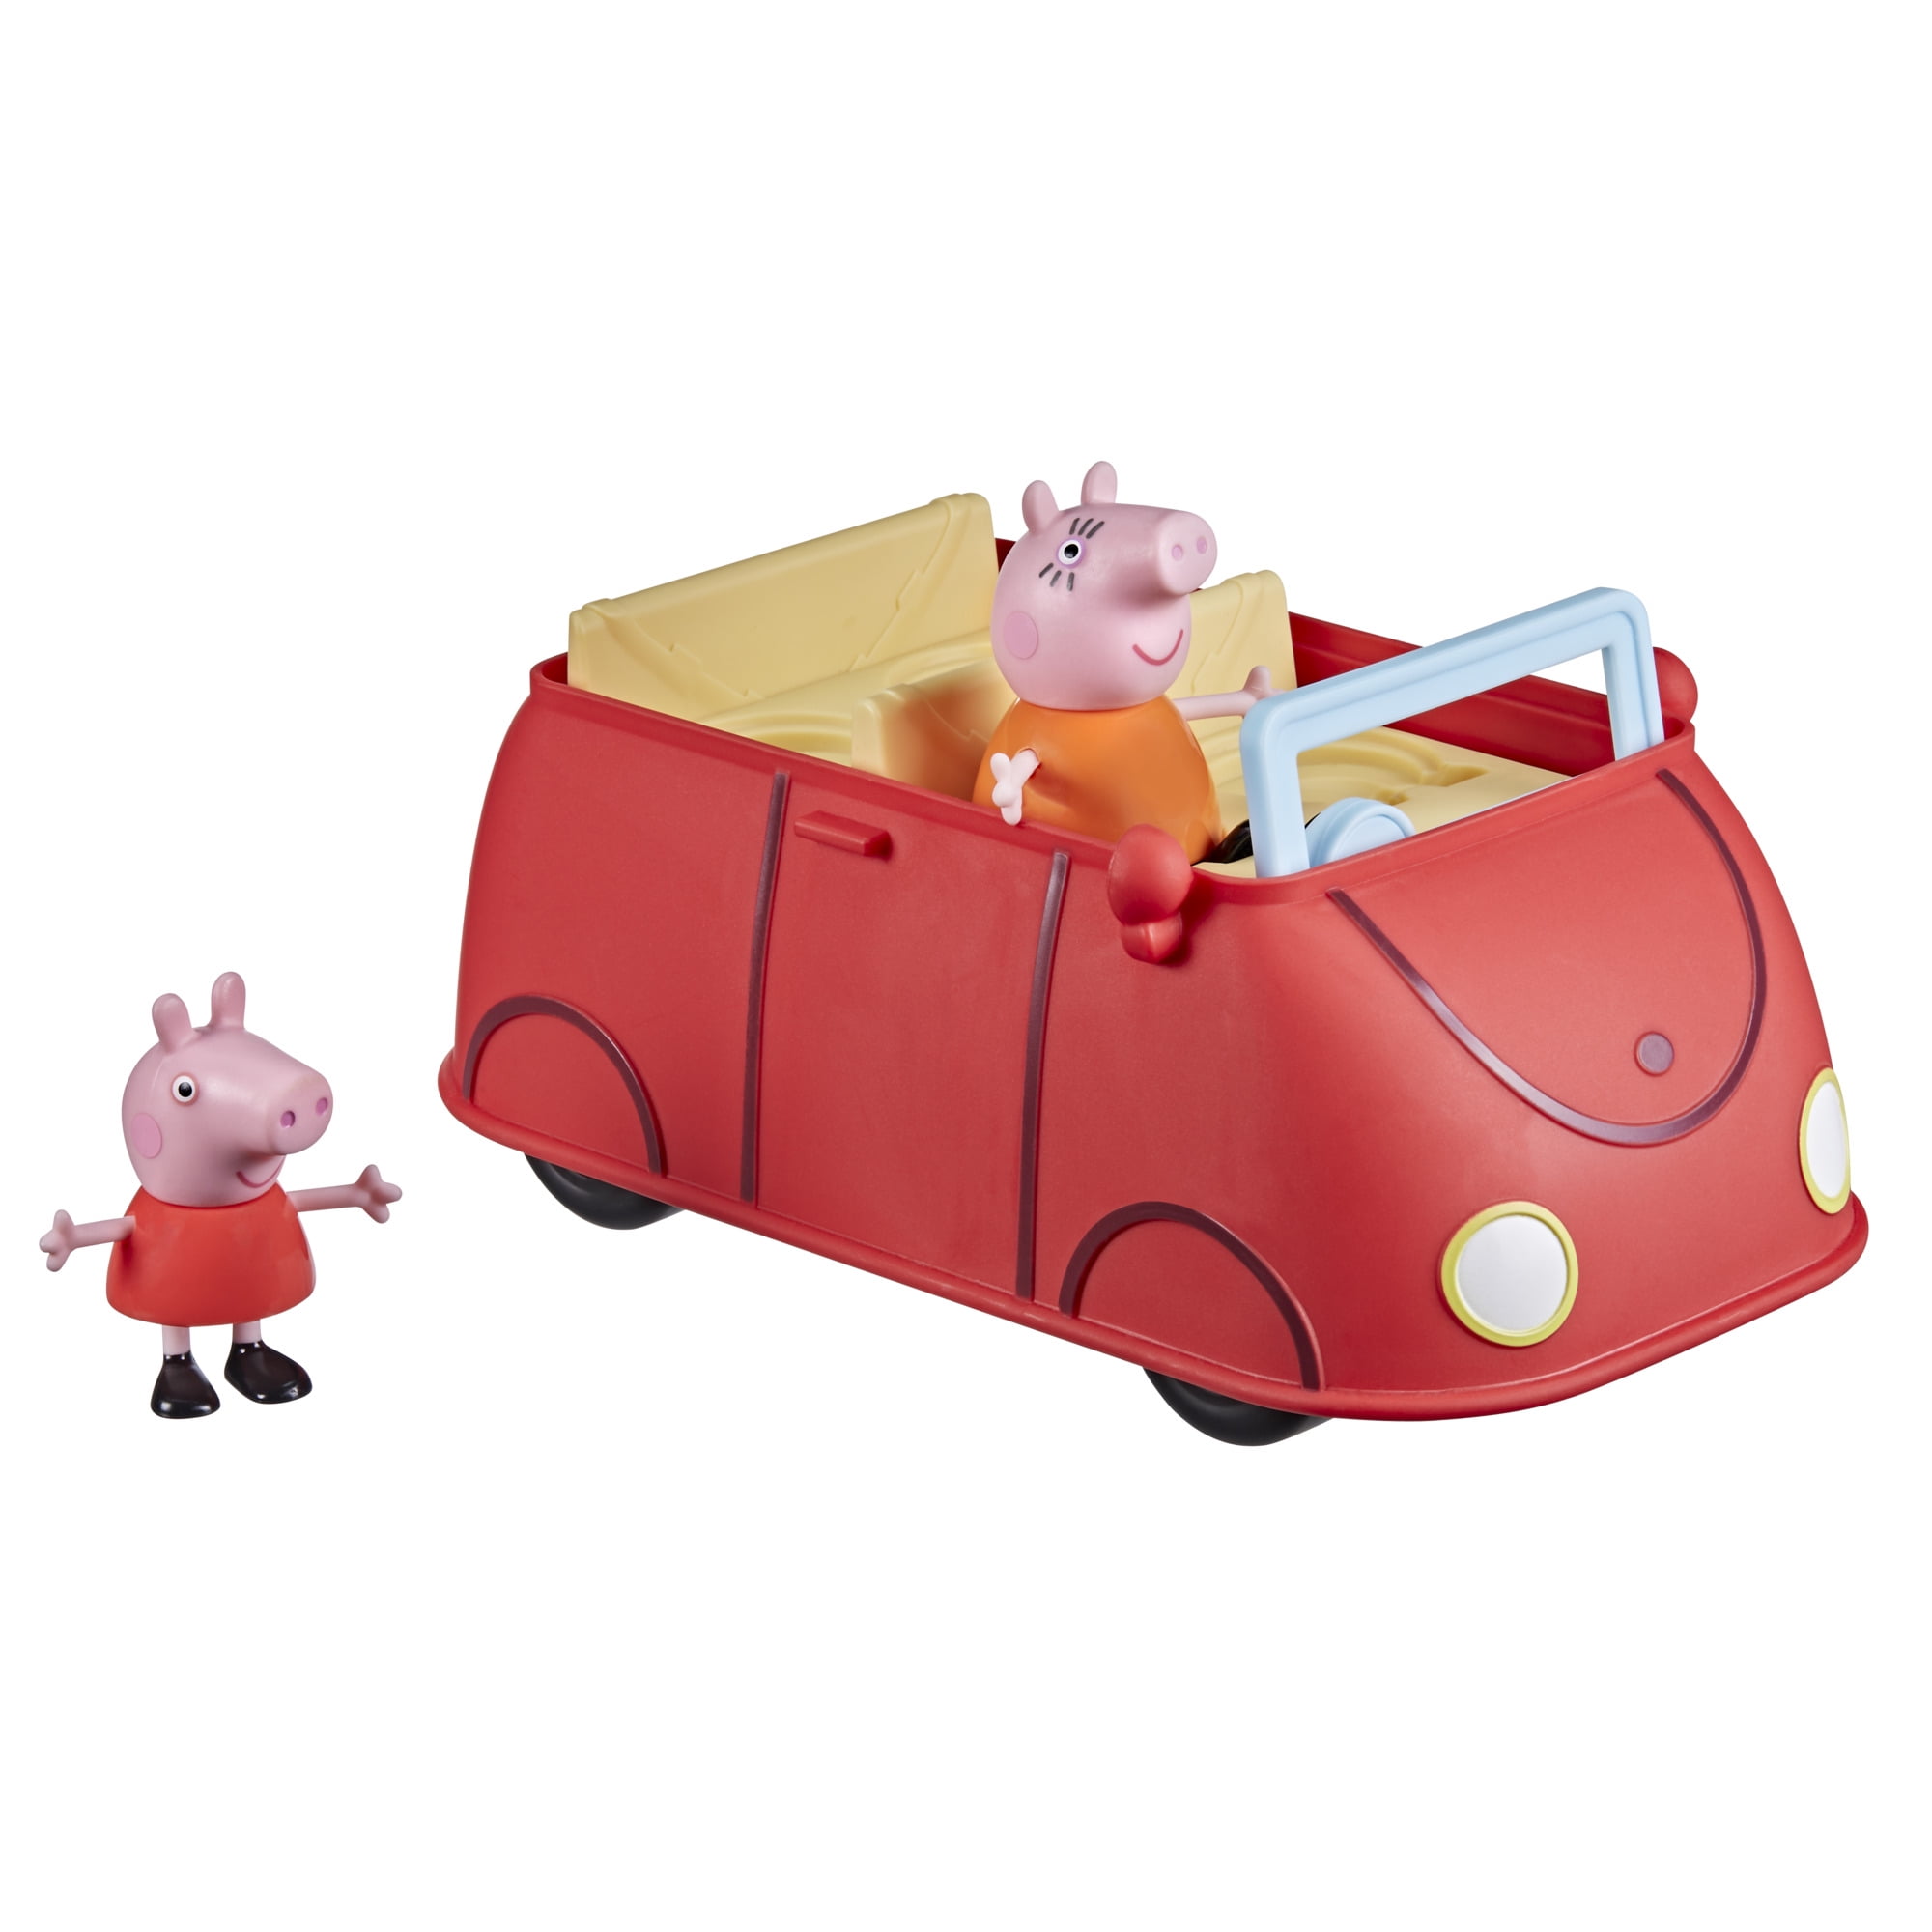 Peppa Pig Peppa's Adventures Peppa's Family Red Car Toy Preschool Playset -  